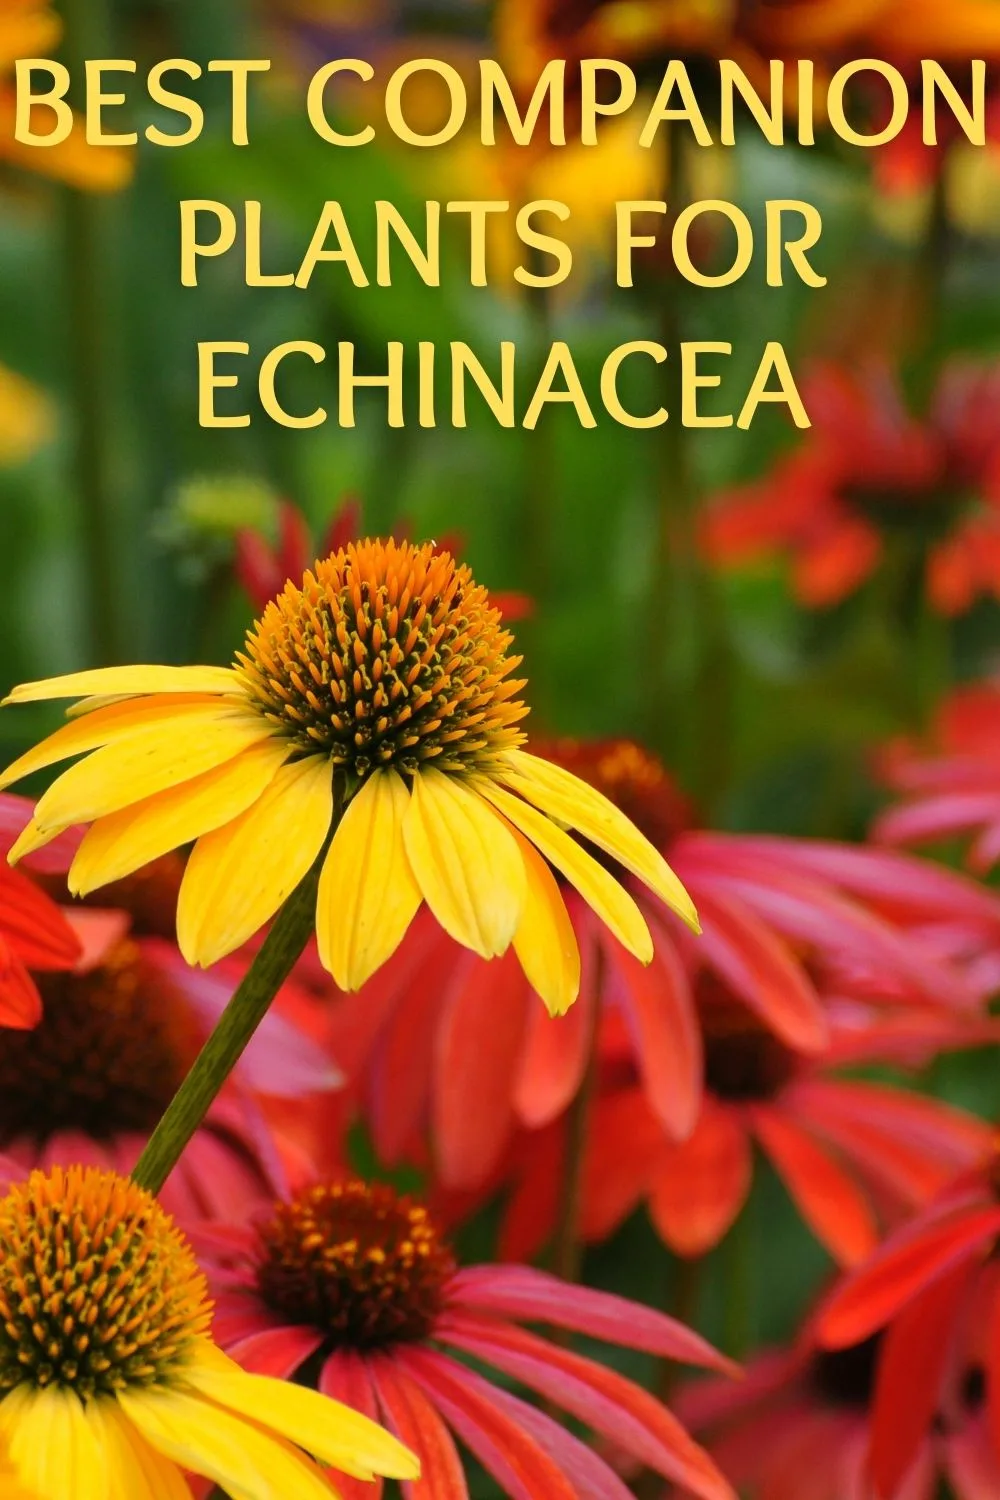 Best companion plants for echinacea